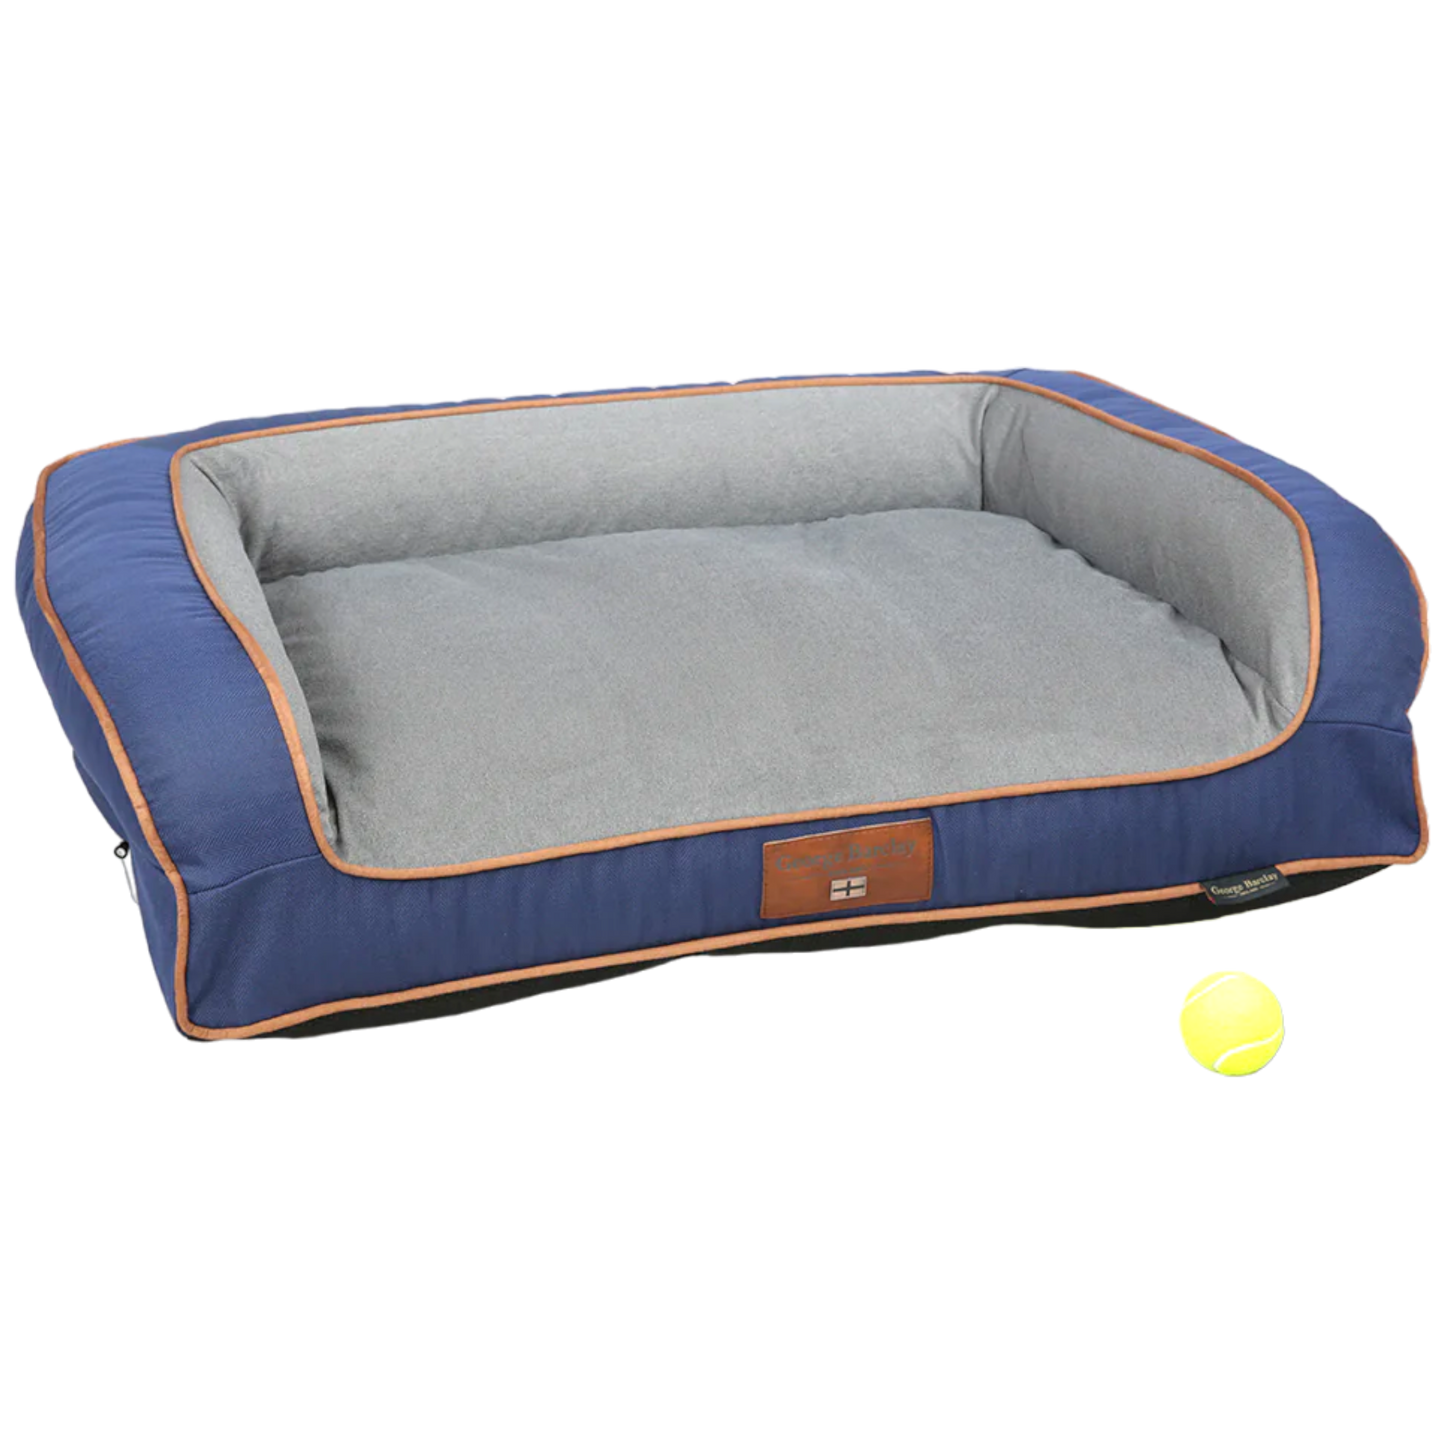 George Barclay Savile Dog Sofa Bed - Mariner's Blue